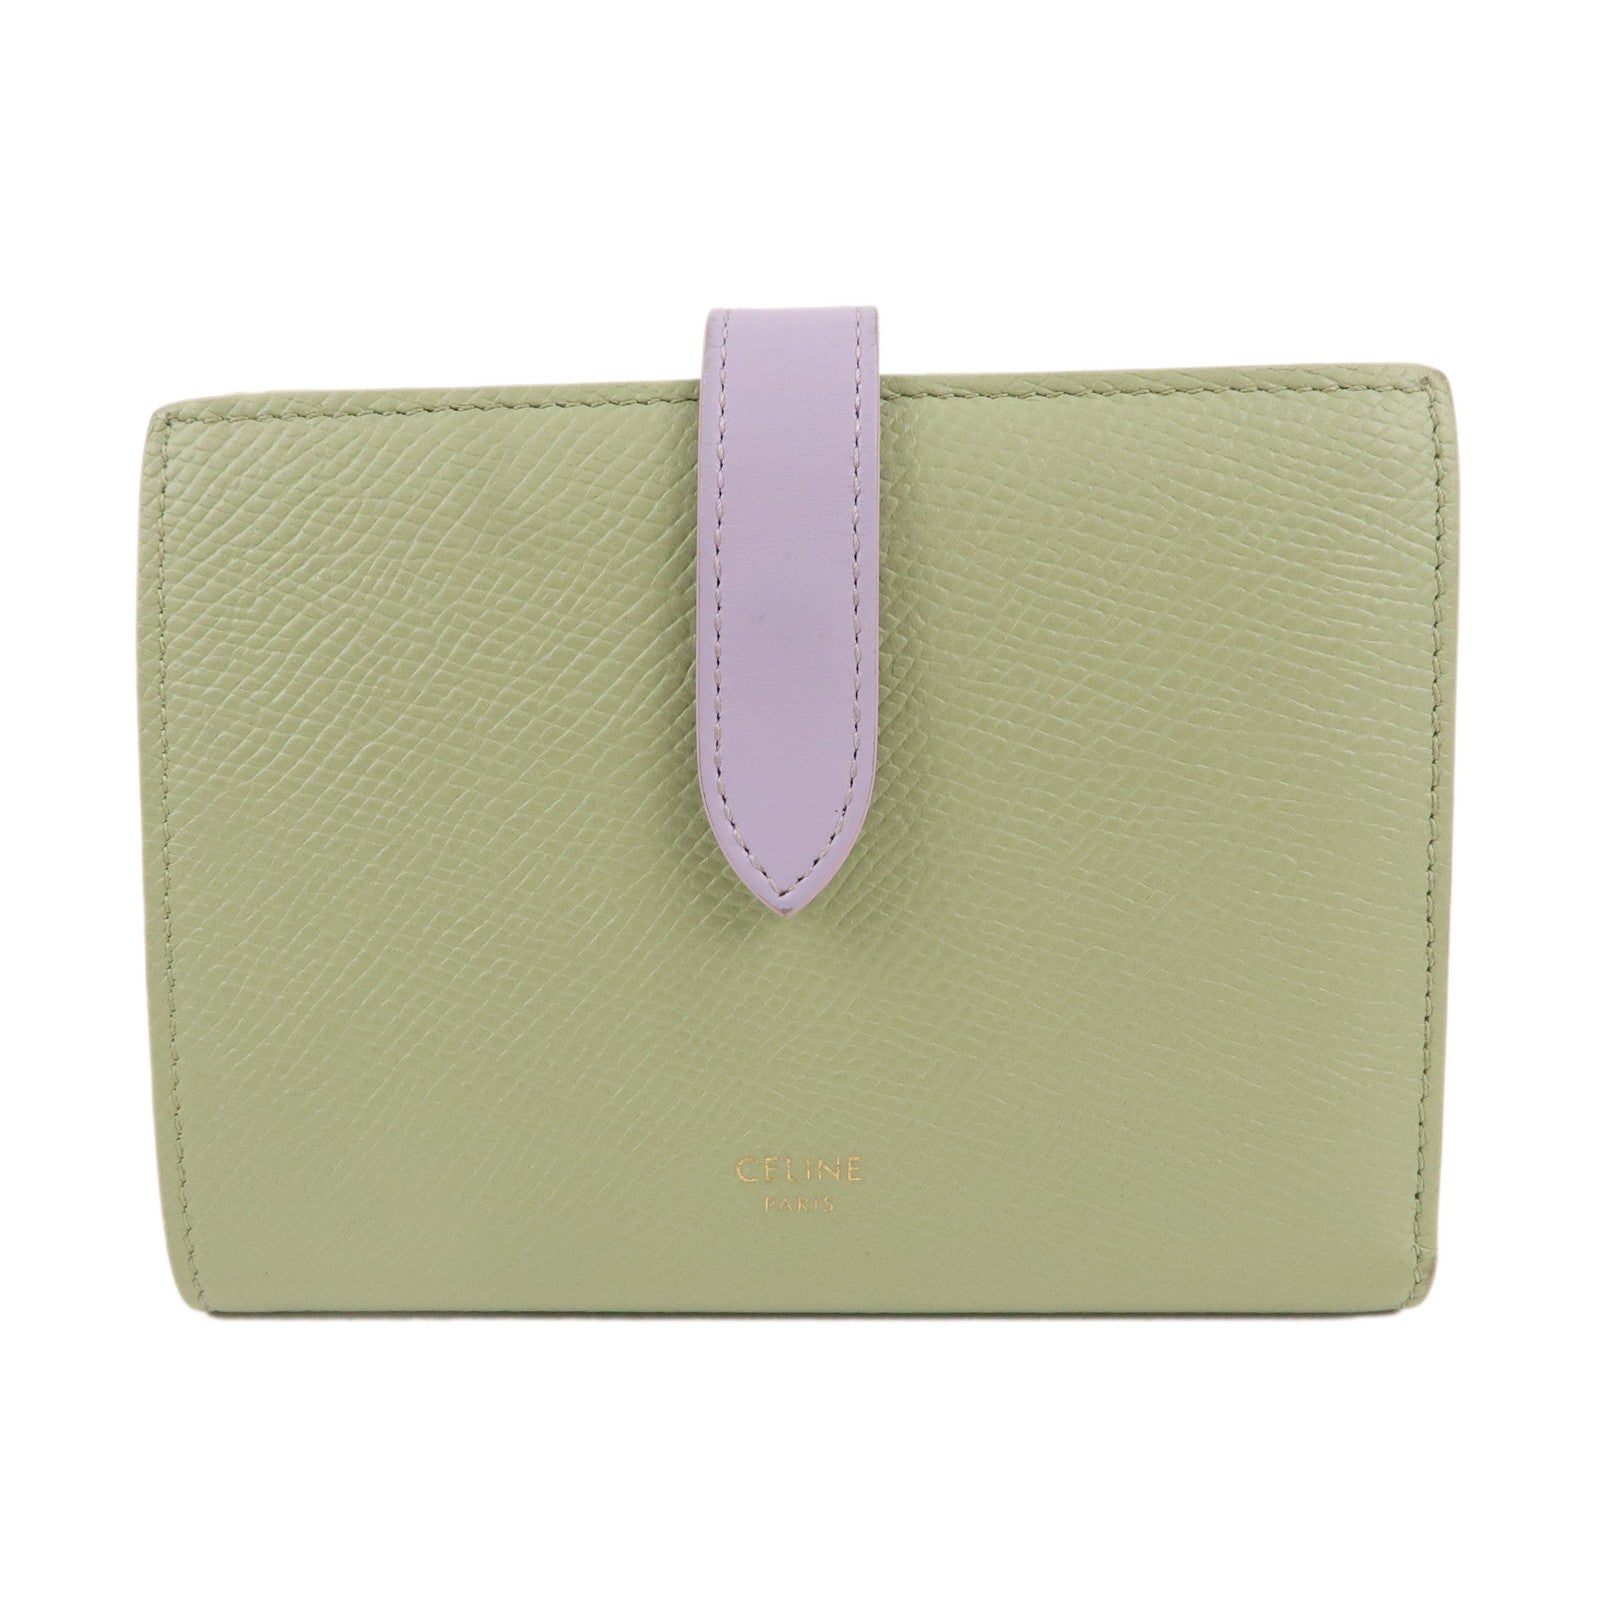 CELINE-Leather-Medium-Strap-Wallet-Sage-Lira-Green-Purple-10B64